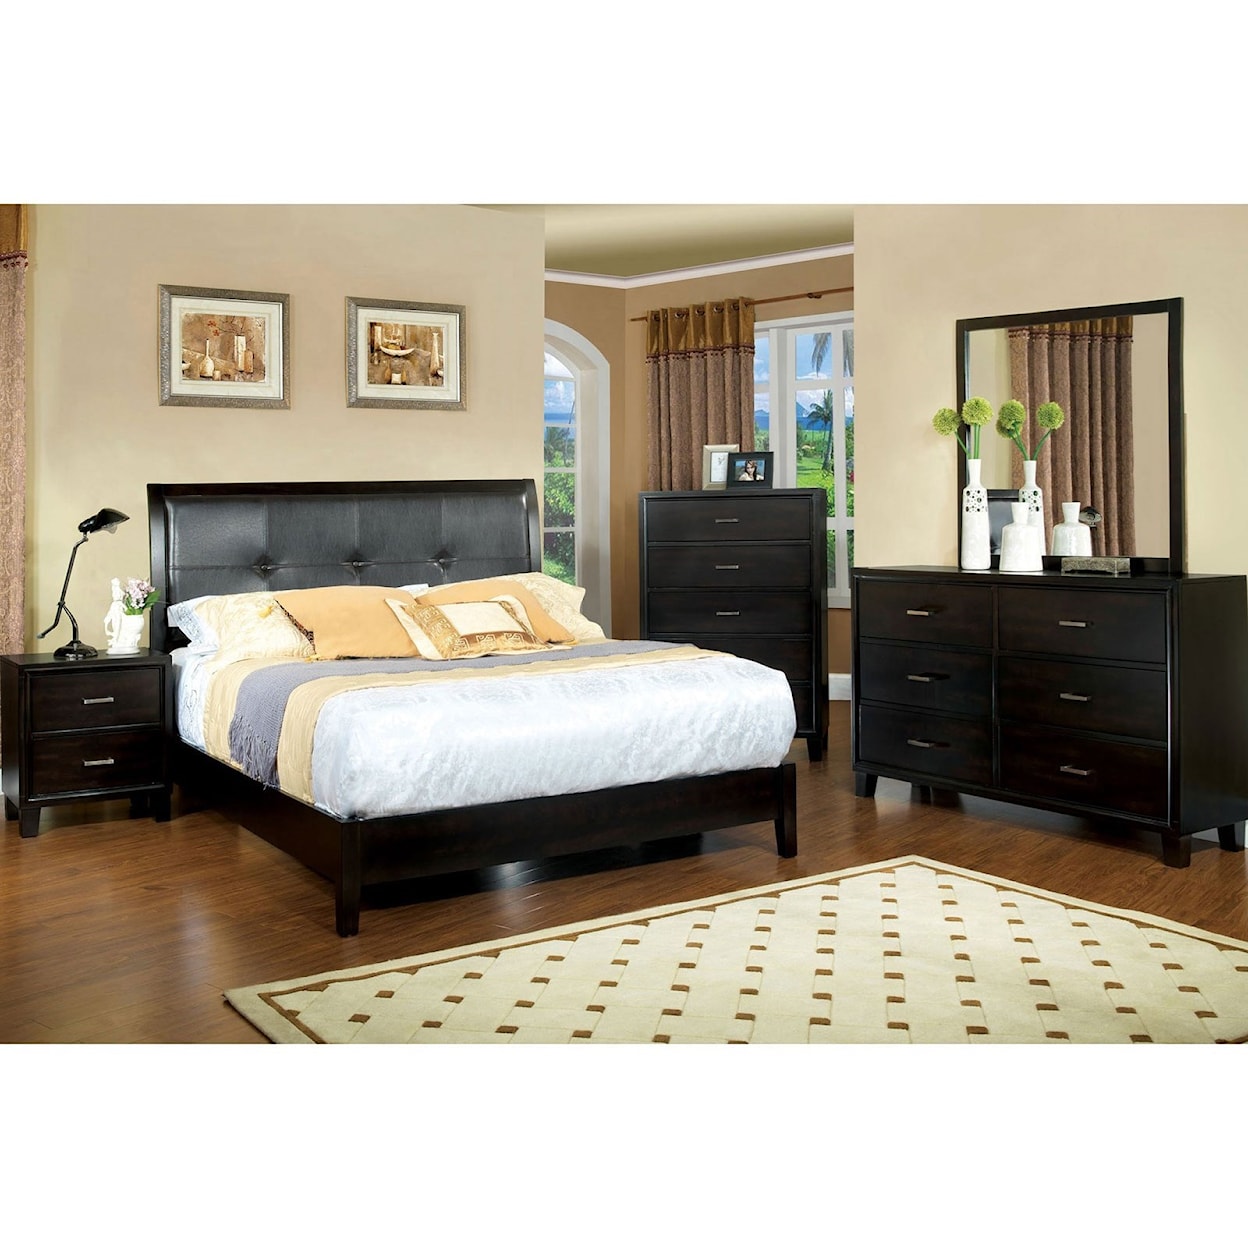 Furniture of America Enrico King Bedroom Group